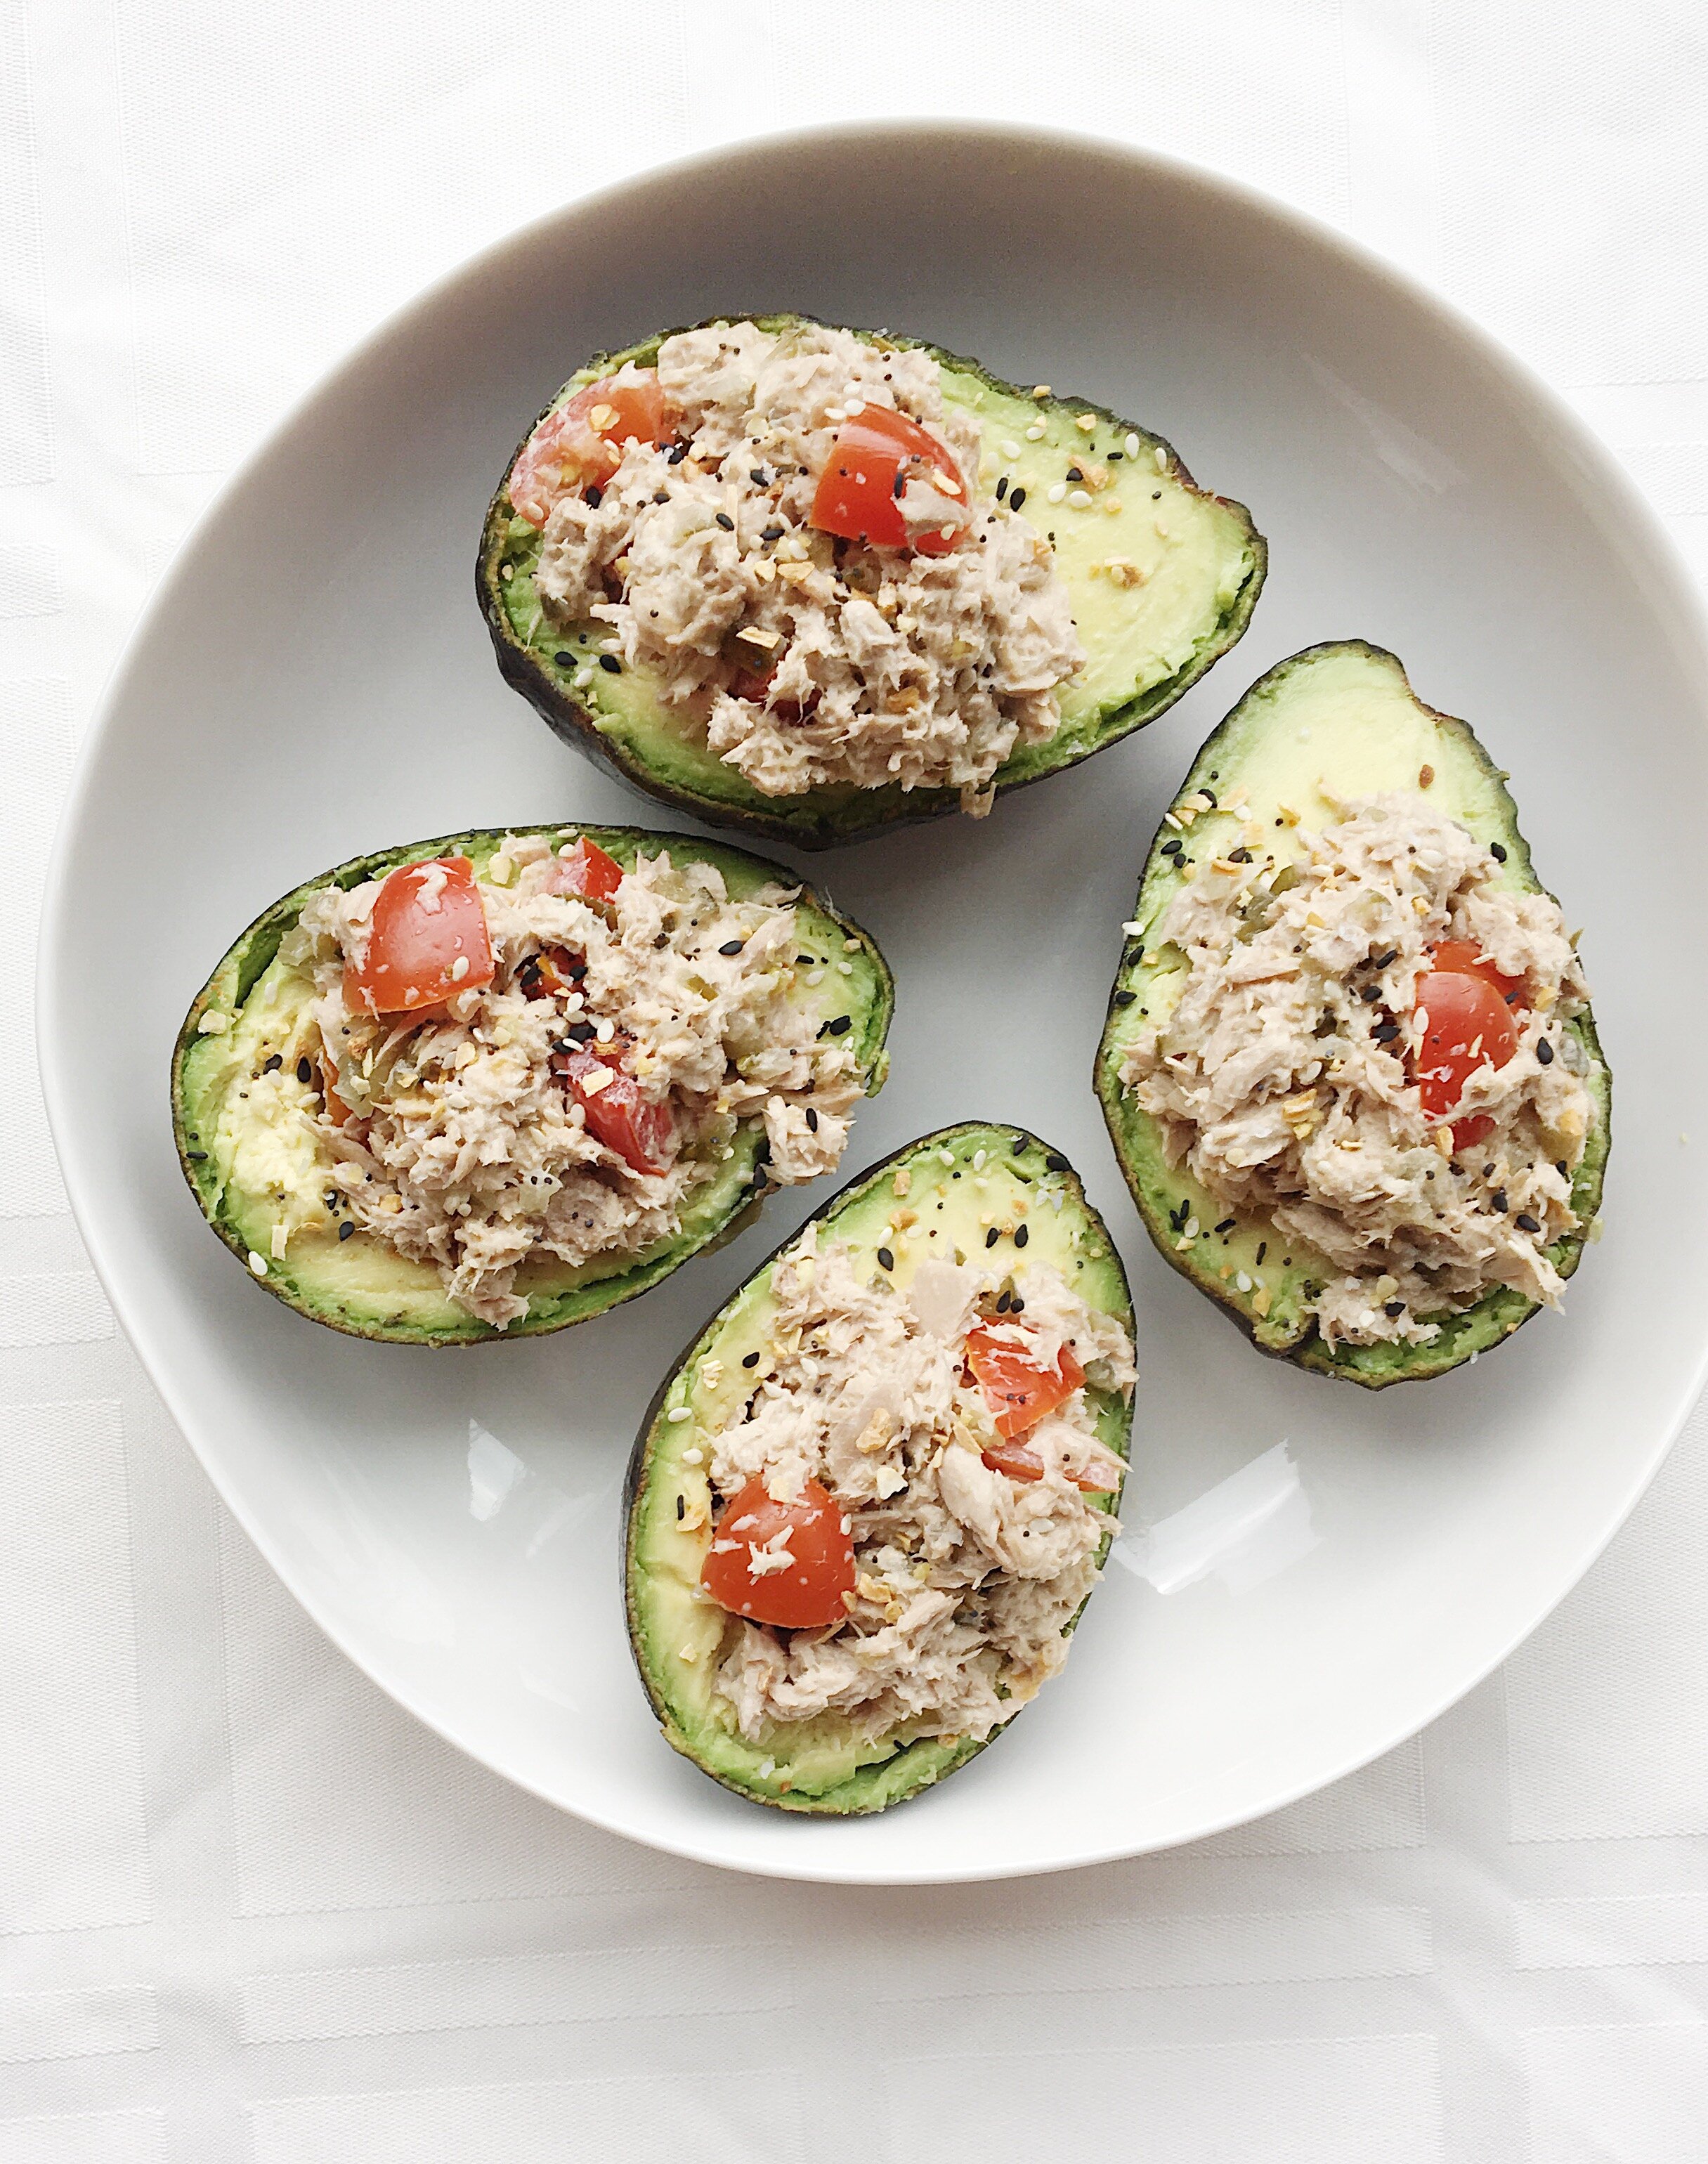 Tuna-Stuffed Avocados | 6 Easy Meals to Make with Tuna